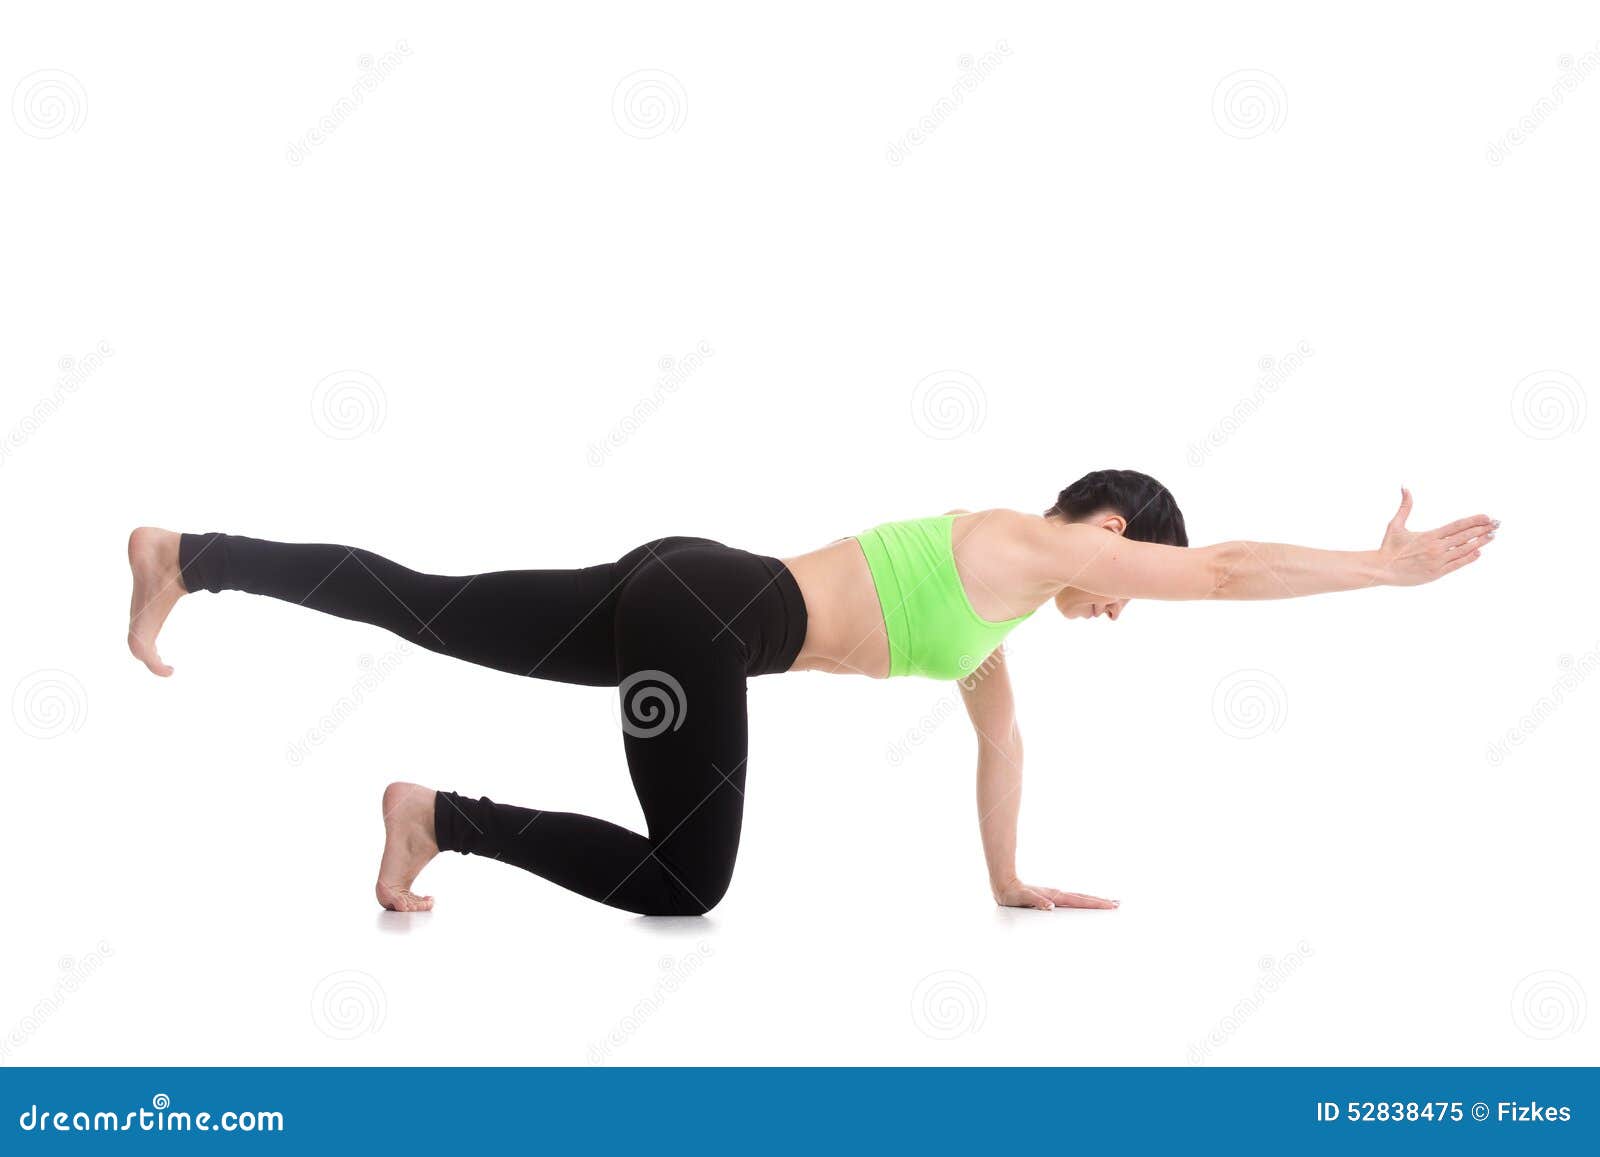 Women silhouette bird of paradise yoga pose Vector Image